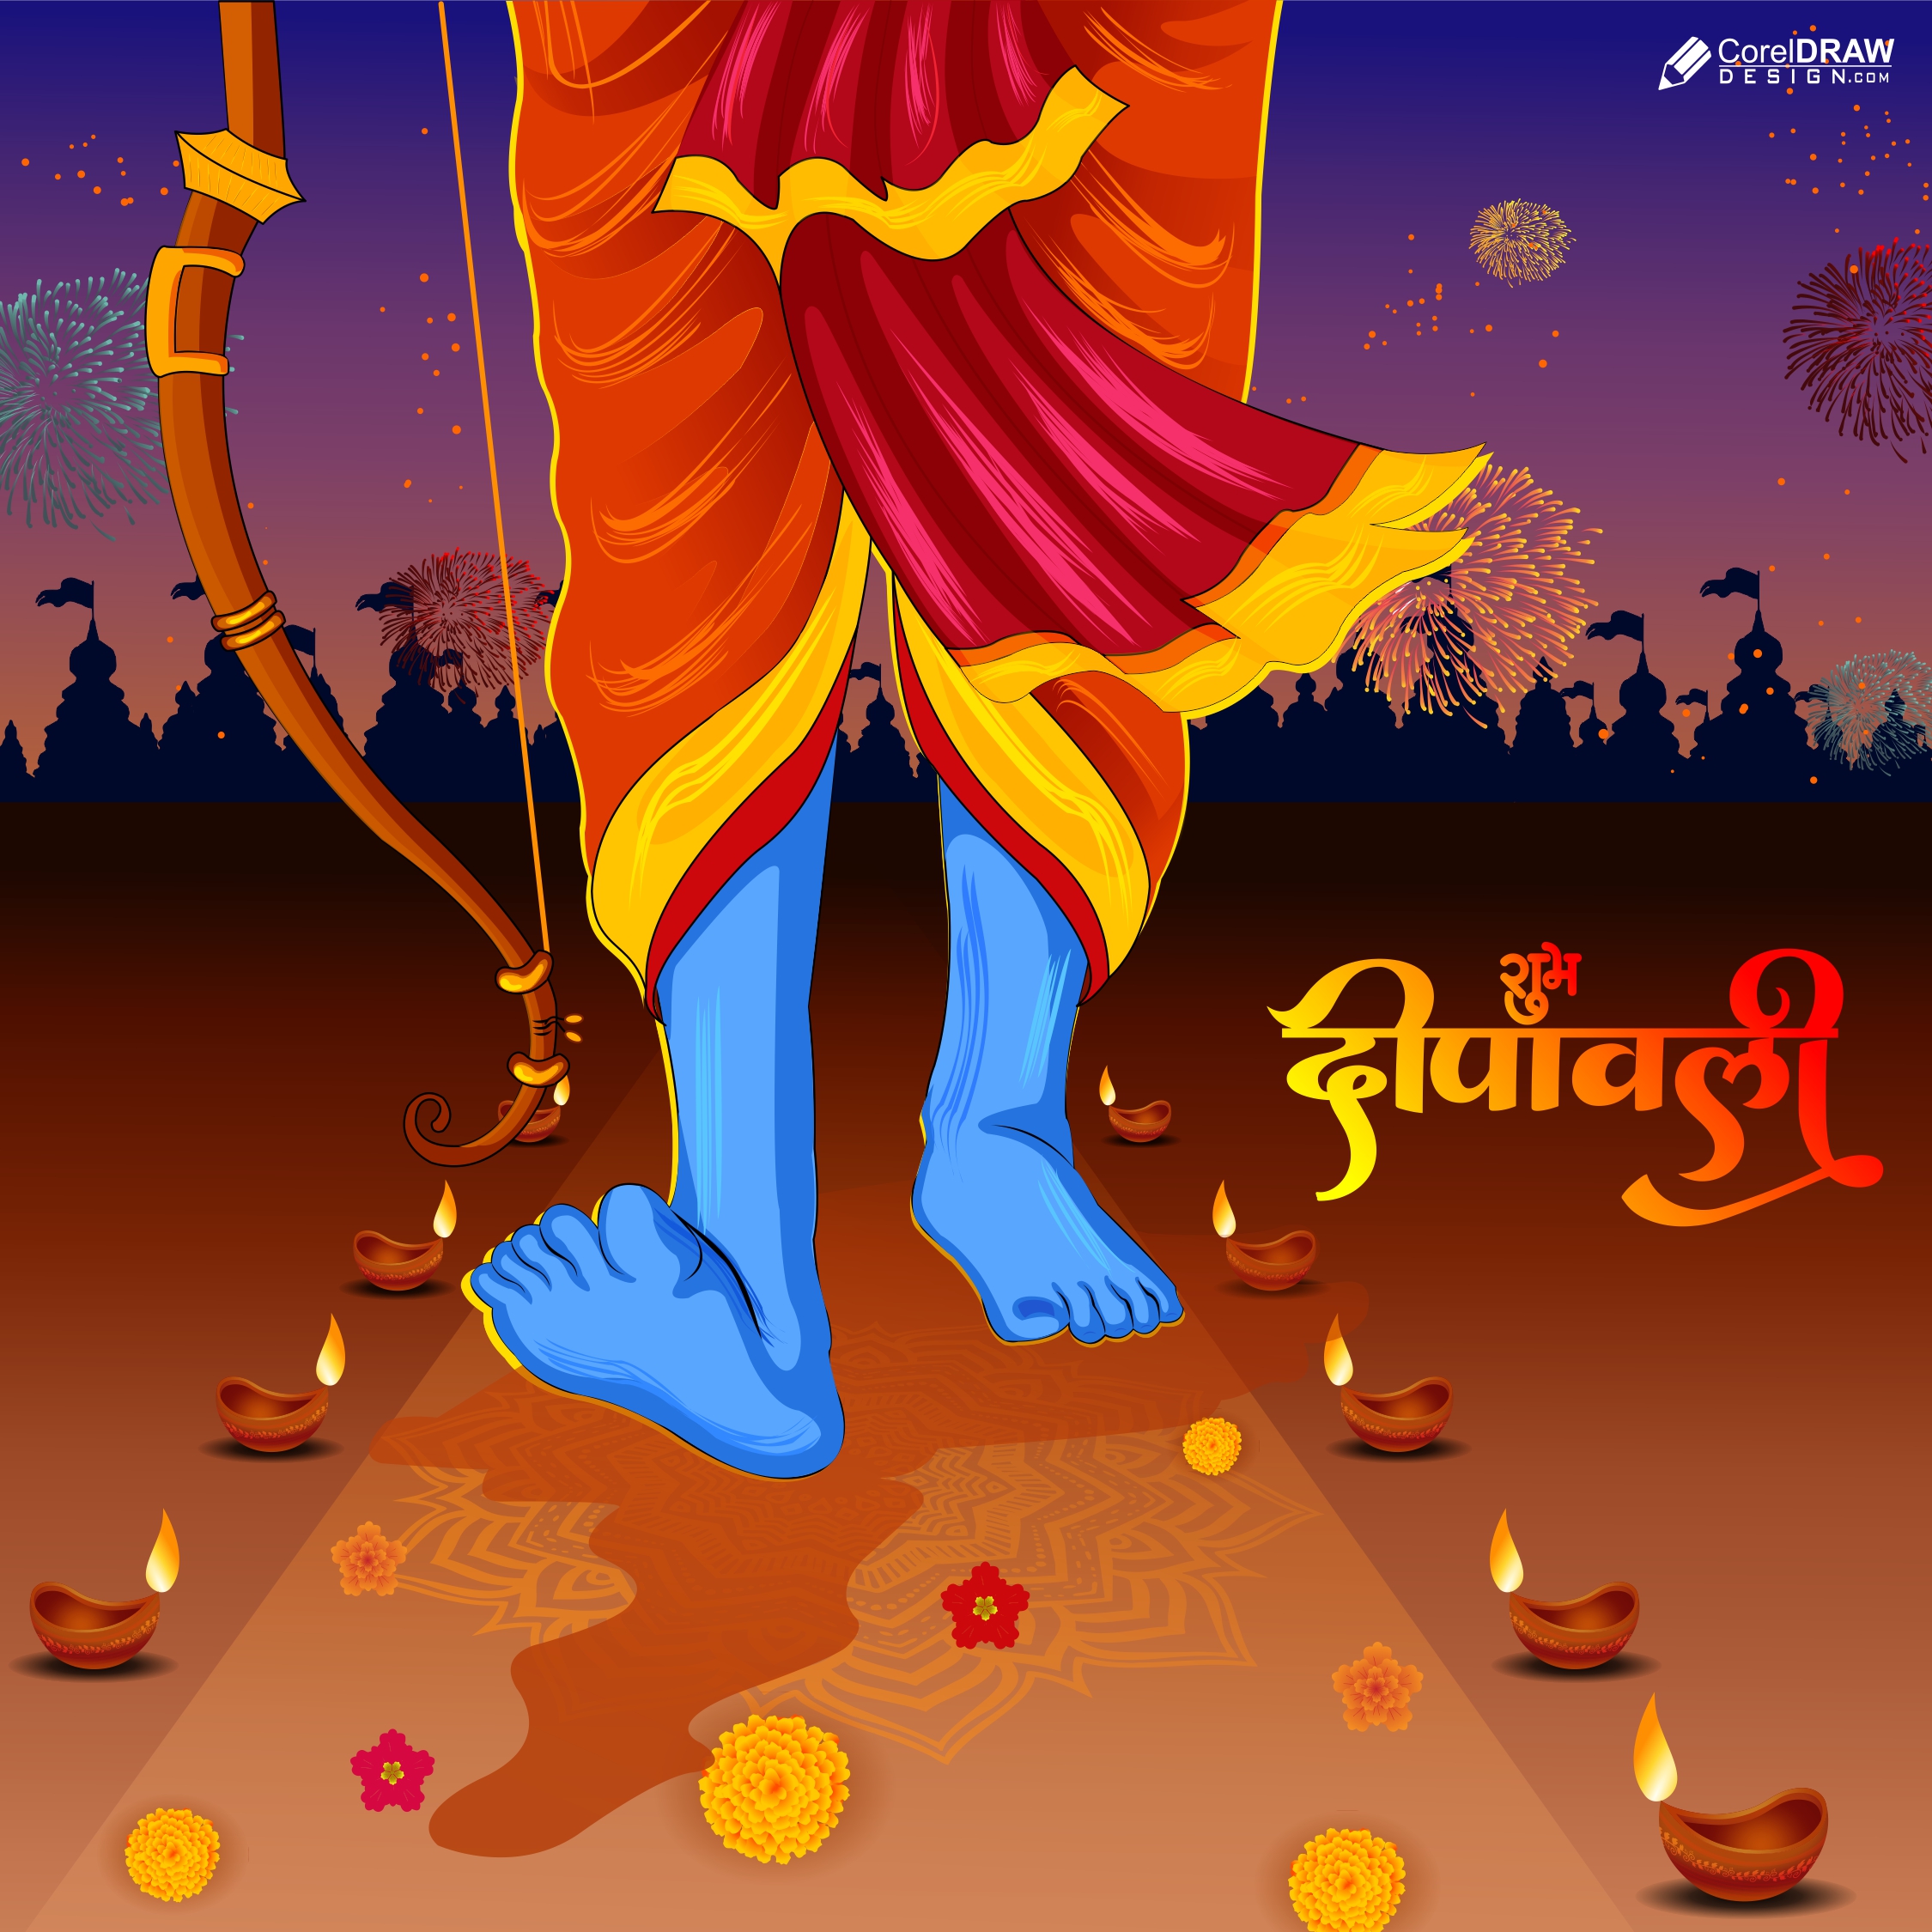 Happy Diwali Celebration With Lord Rama, Shree Ram Diwali Festival